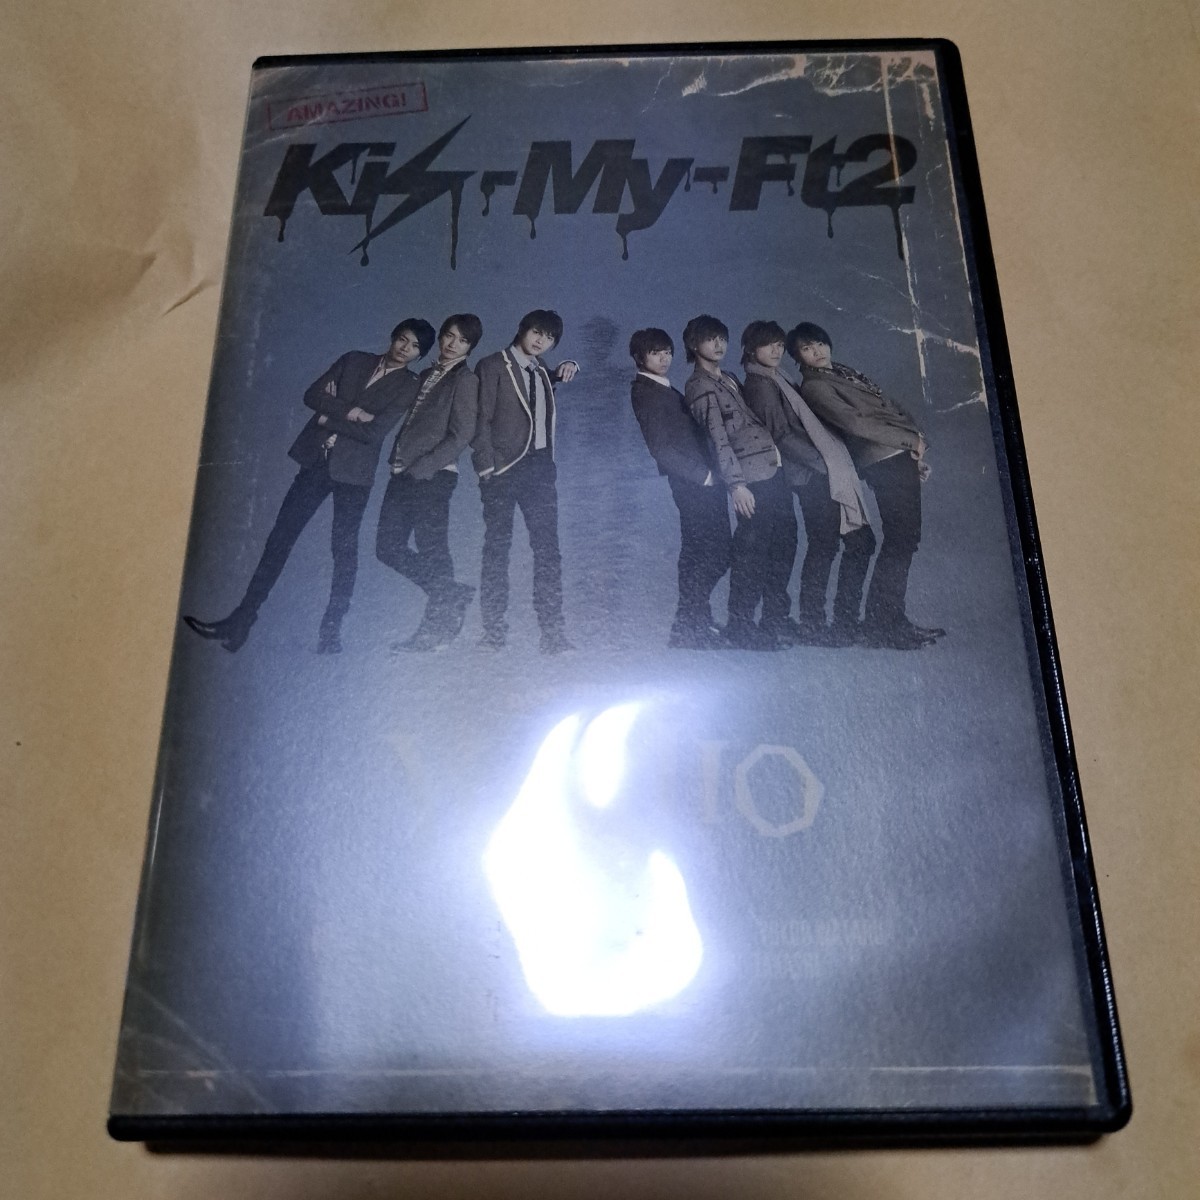 Kis-My-Ft2 YOSHIO-new member-〈初回生産限定盤〉